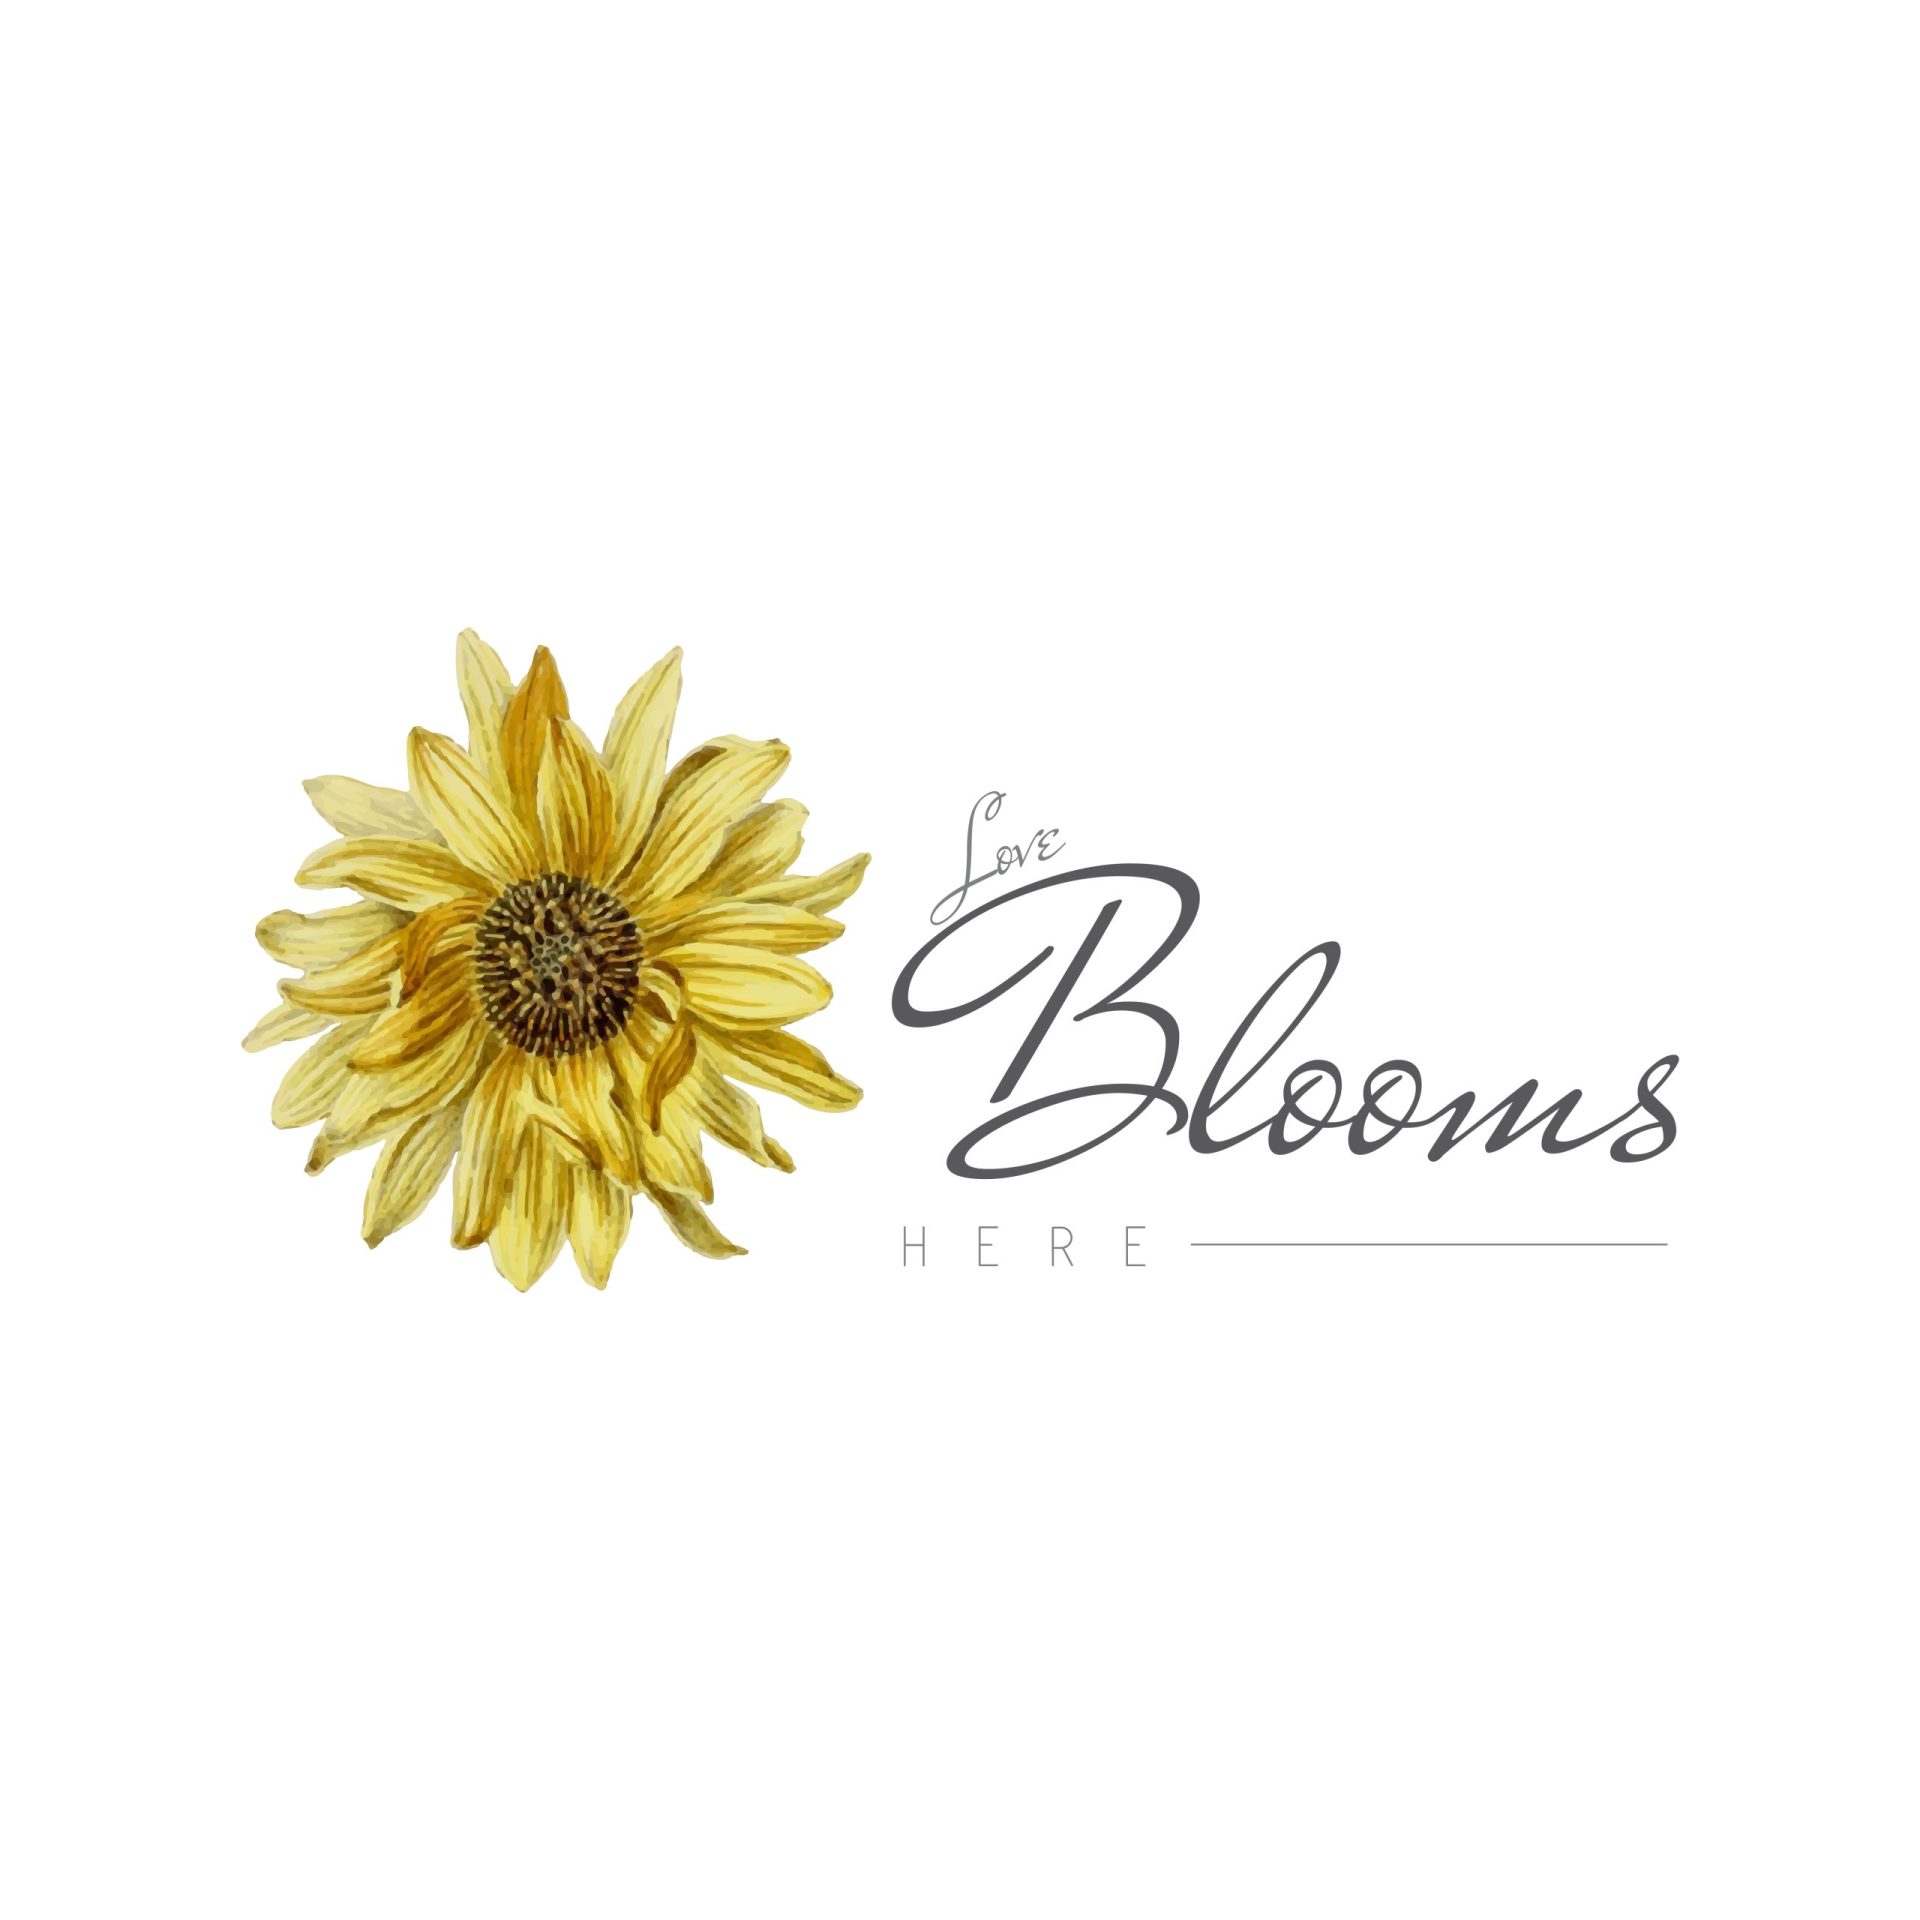 sunflower logo ideas 1